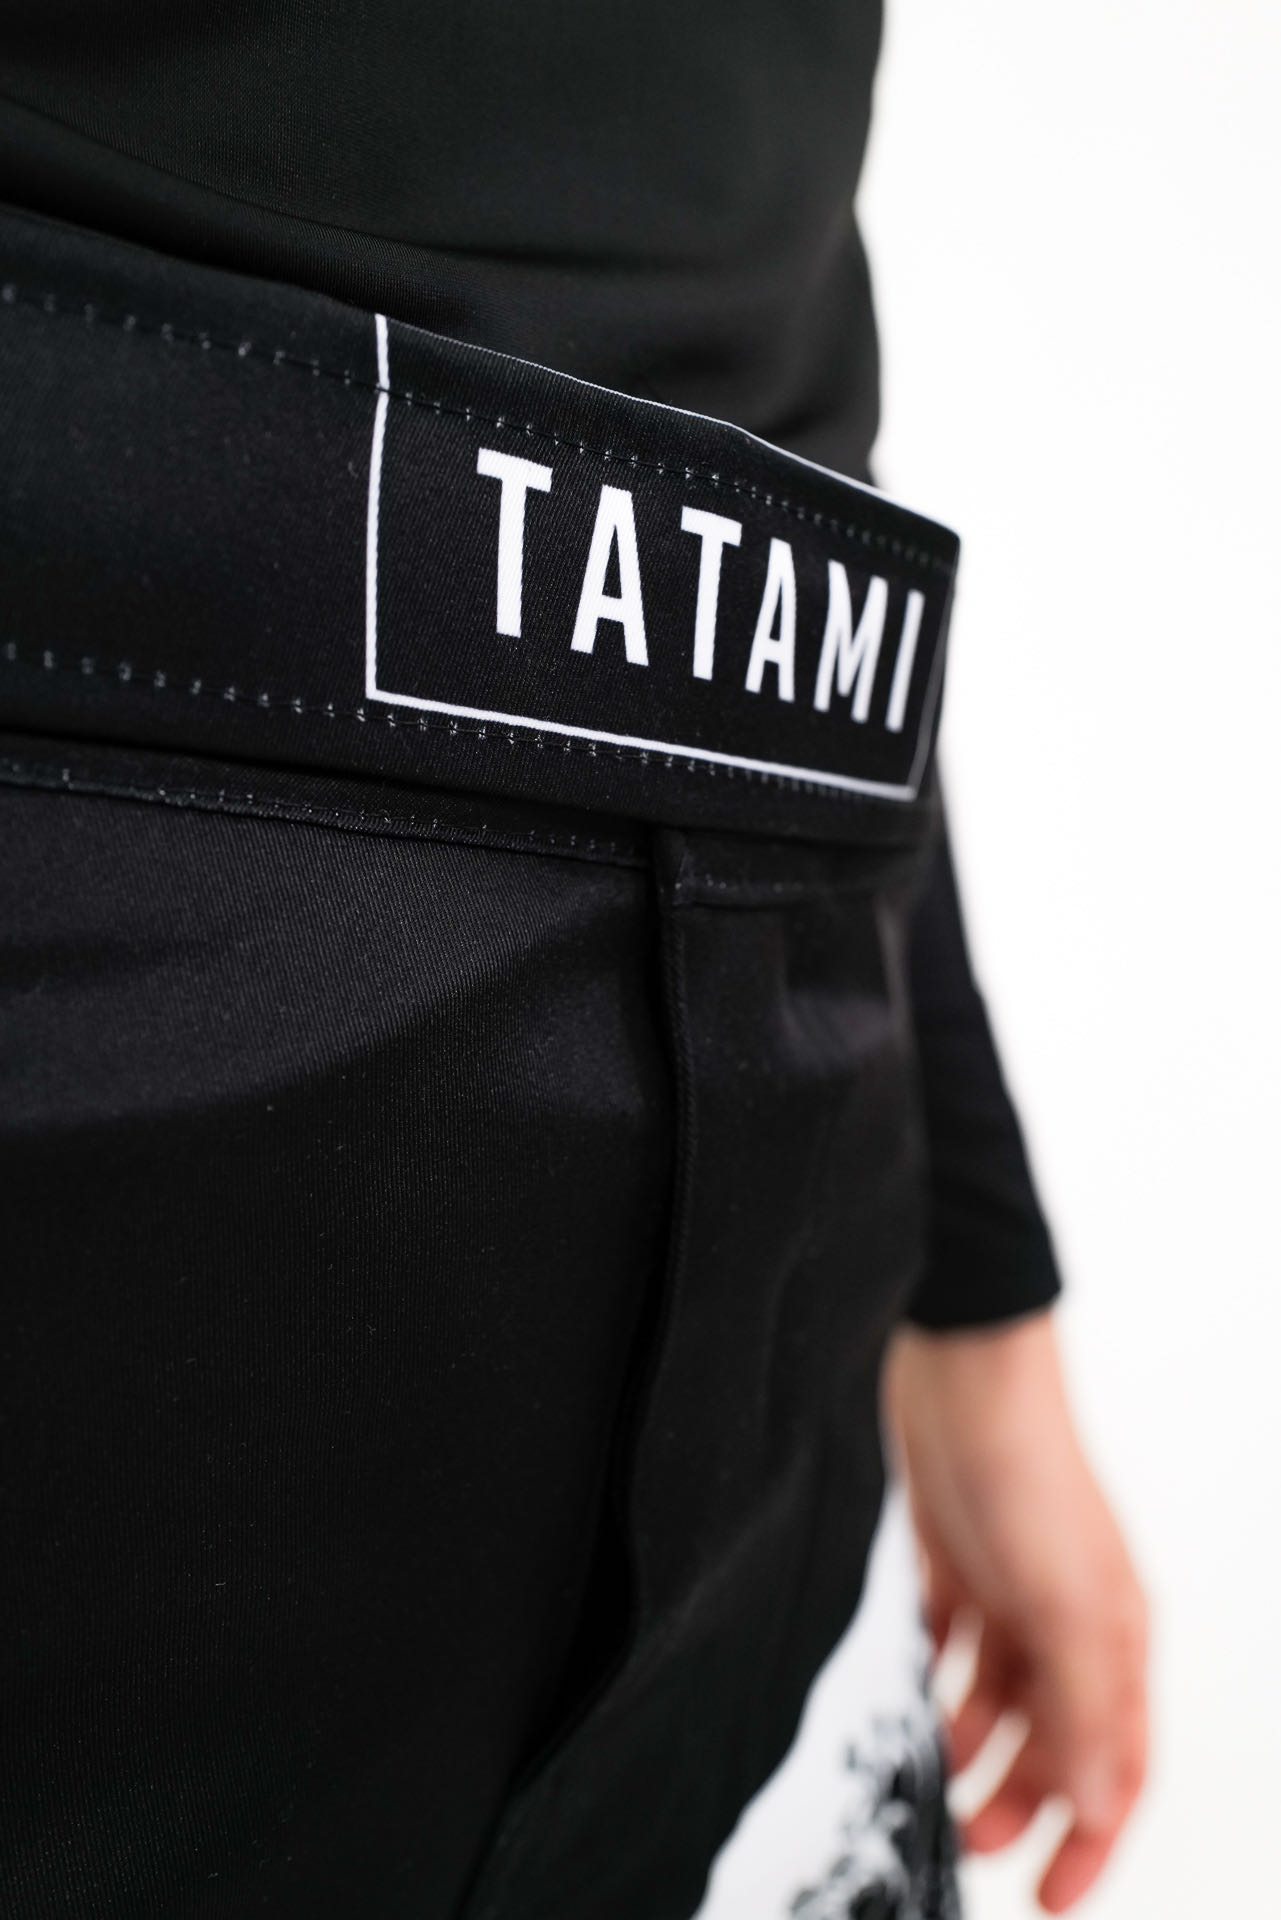 tatami kanagawa shorts frauen fengbao details